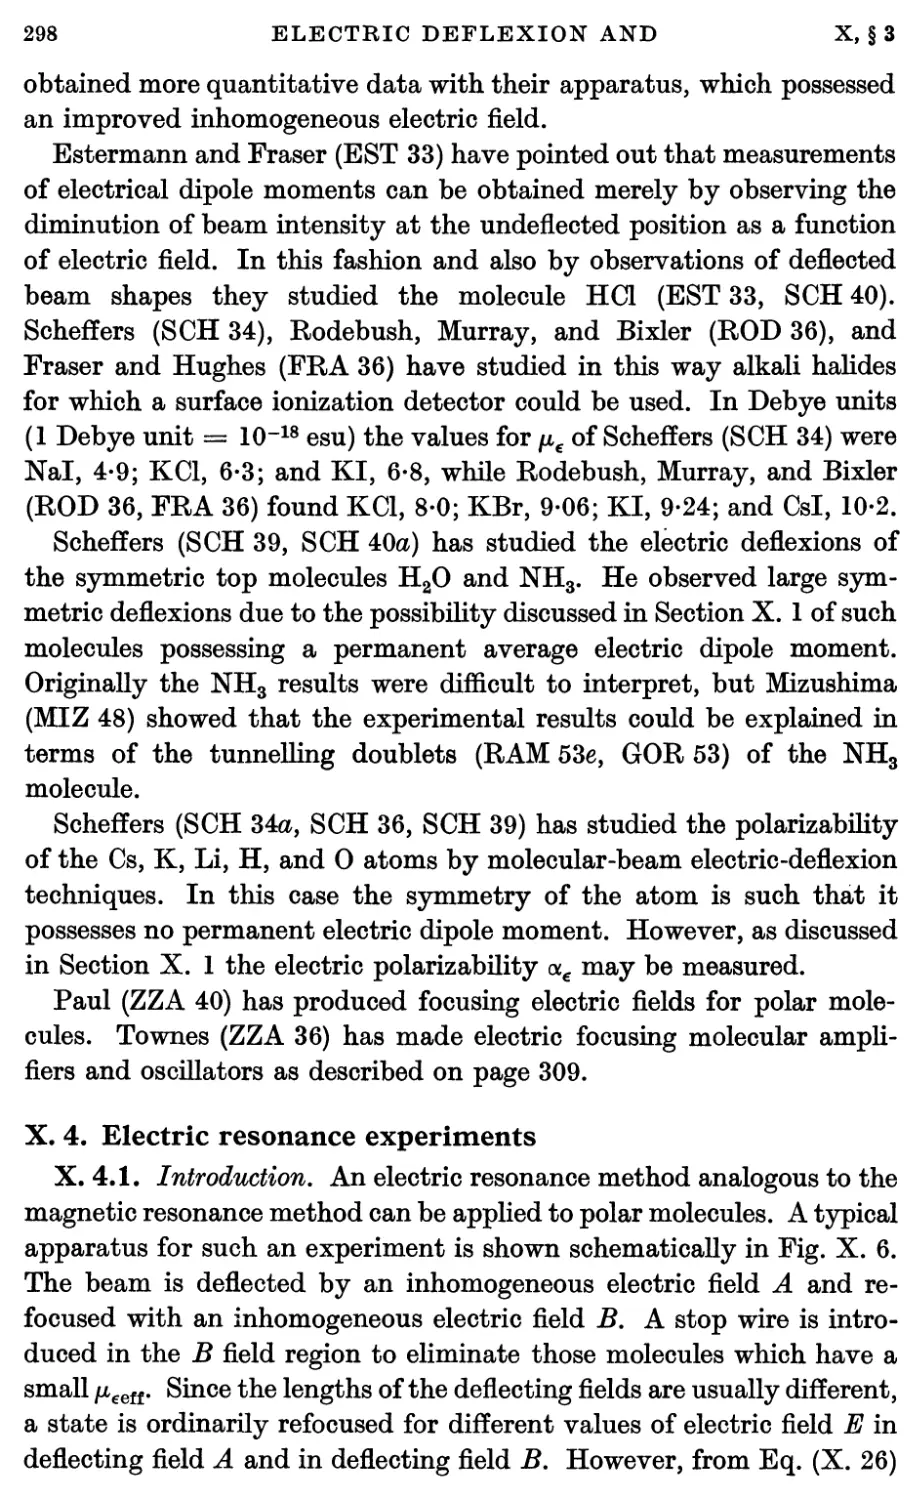 X.4. Electric Resonance Experiments